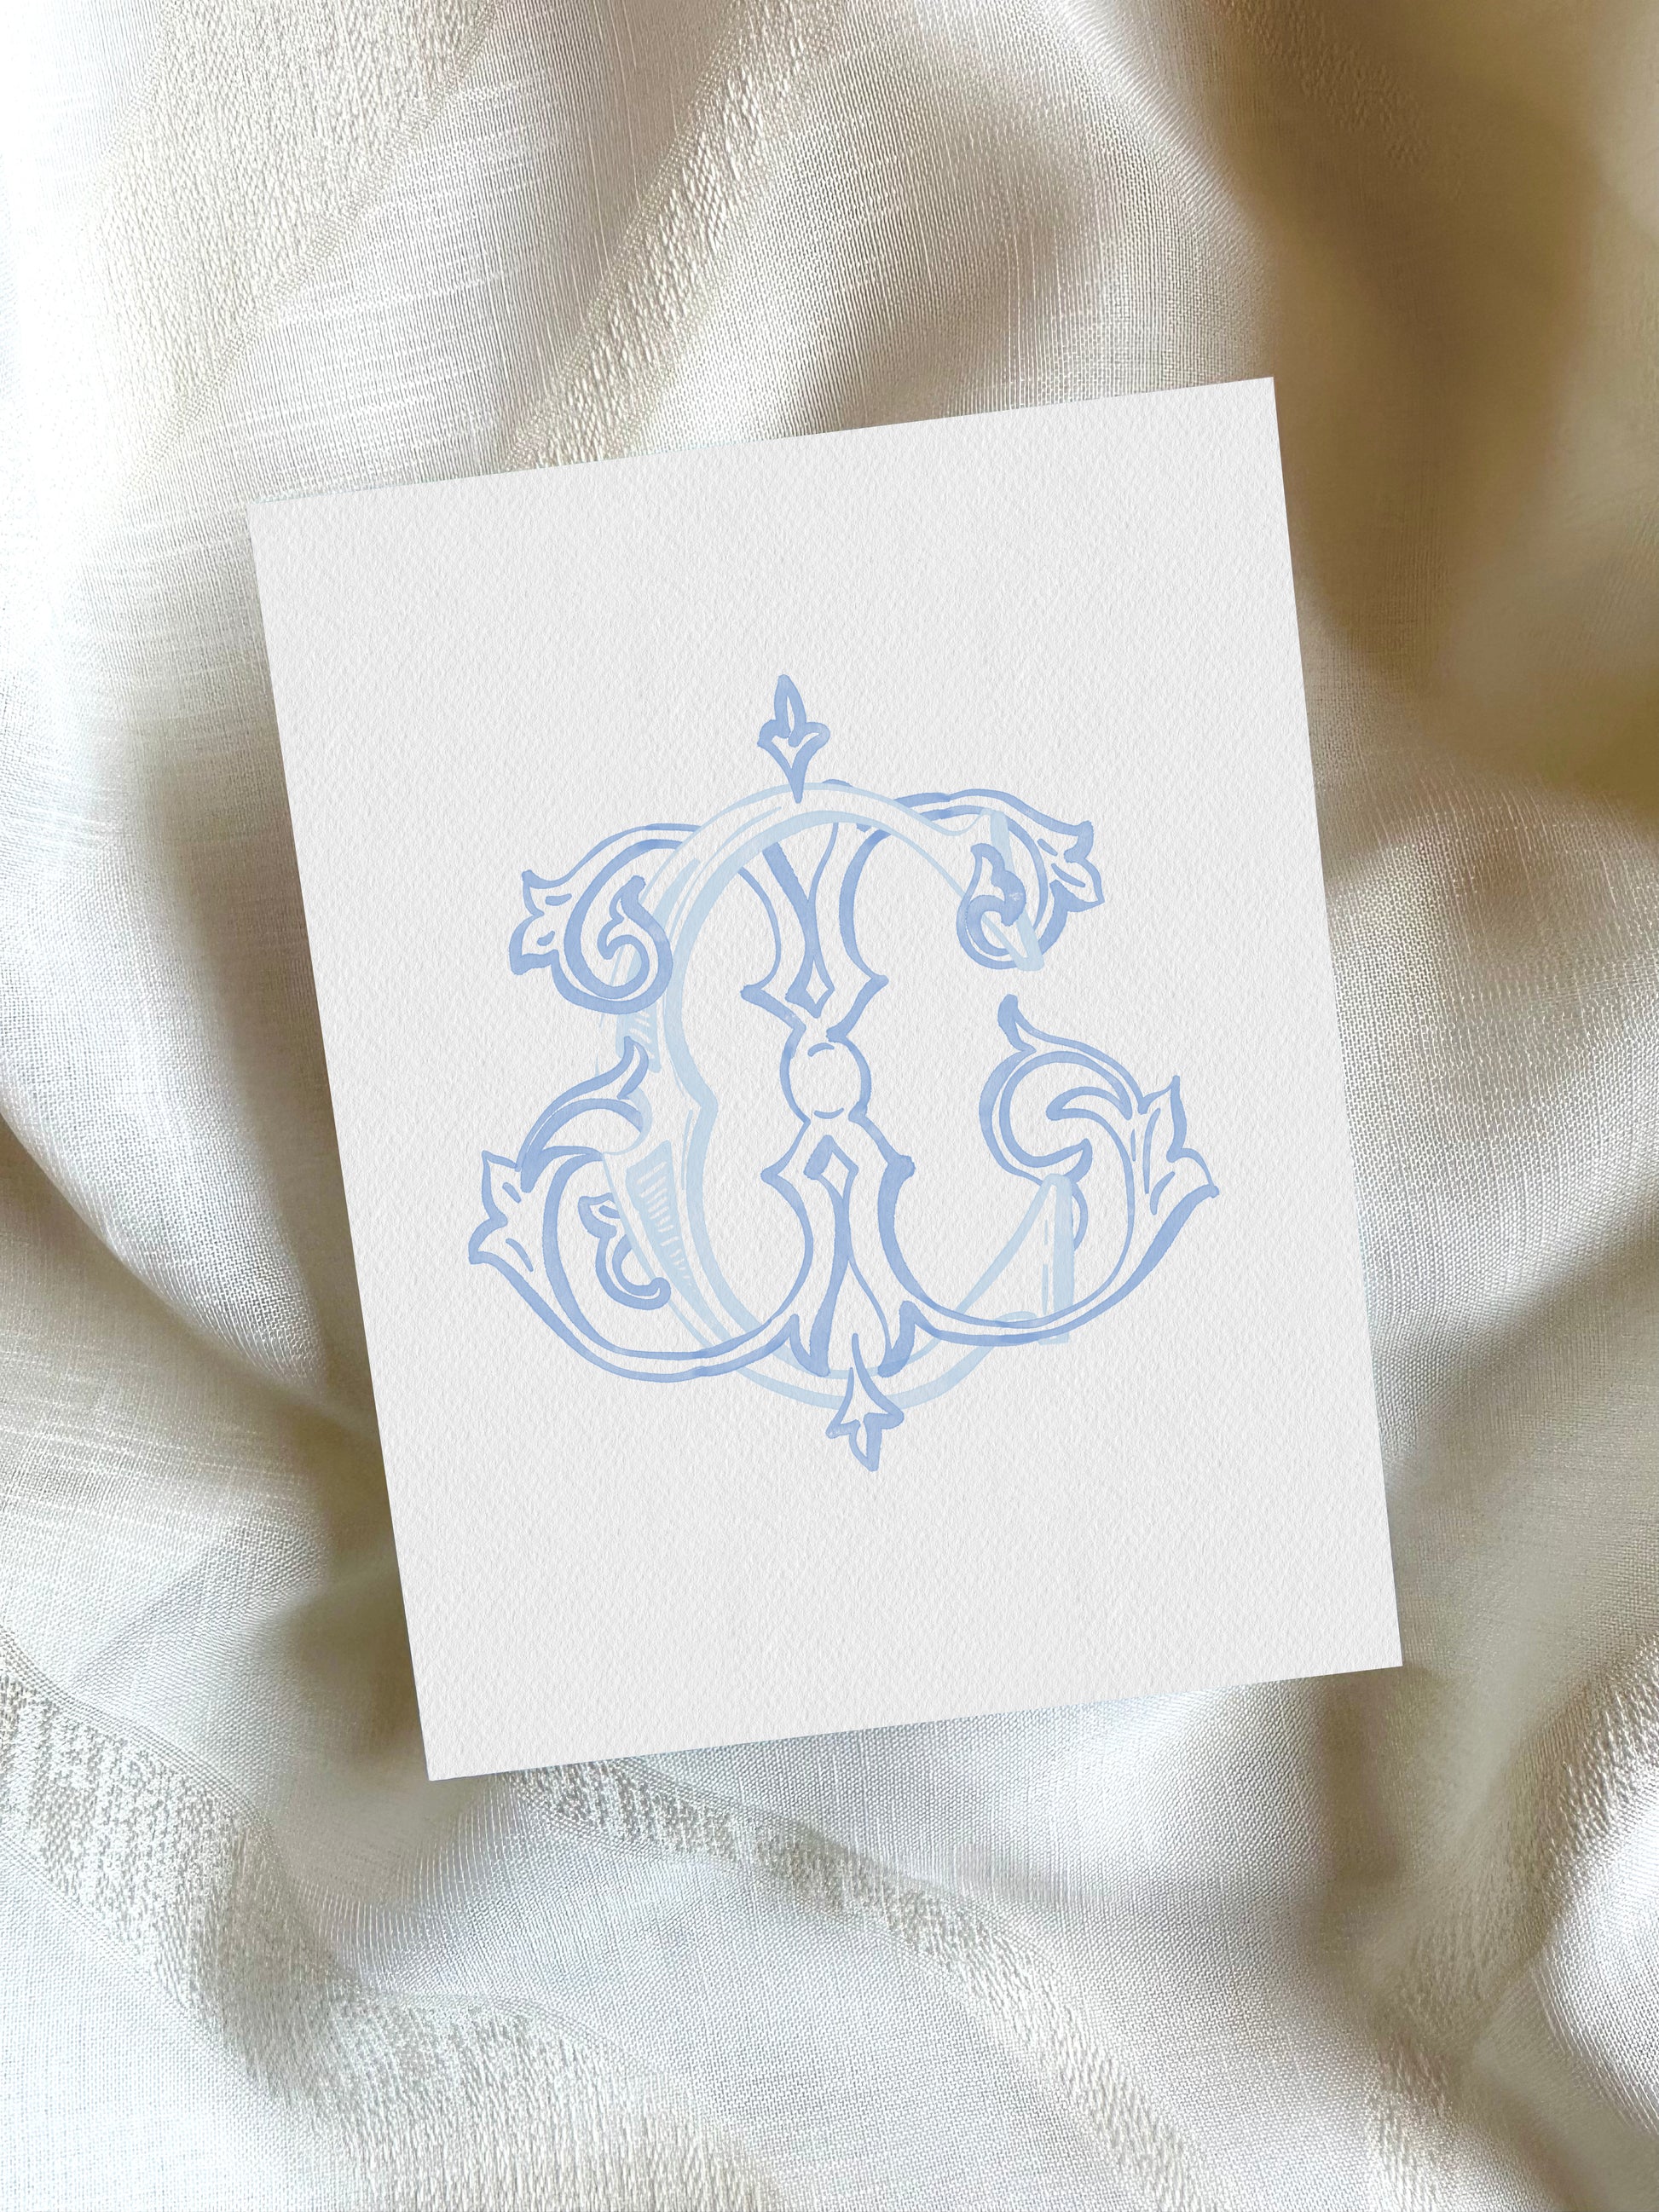 2 Letter Monogram with Letters CX XC | Digital Download - Wedding Monogram SVG, Personal Logo, Wedding Logo for Wedding Invitations The Wedding Crest Lab